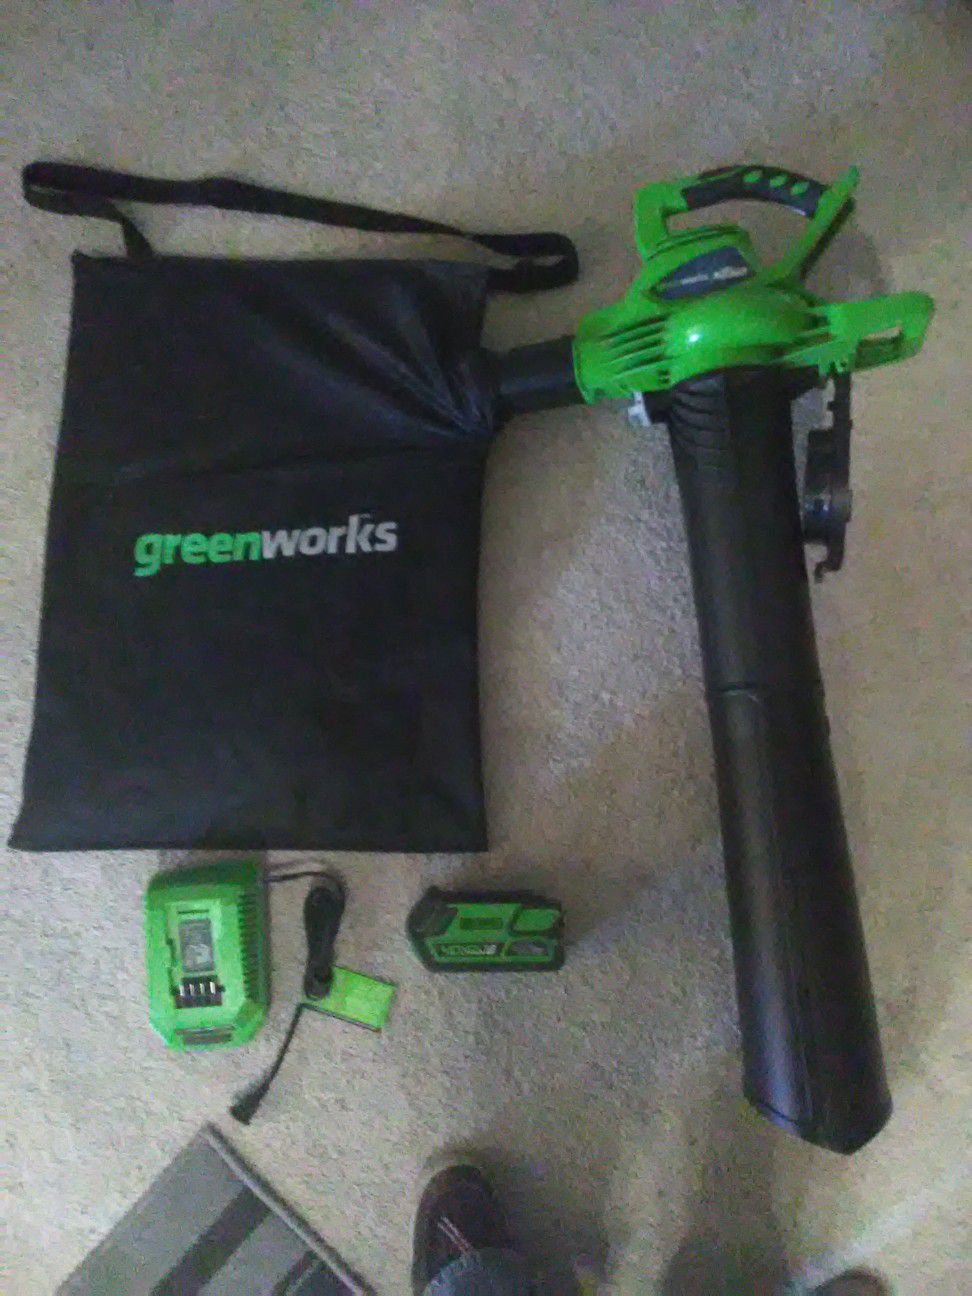 Green works leaf blower/collector